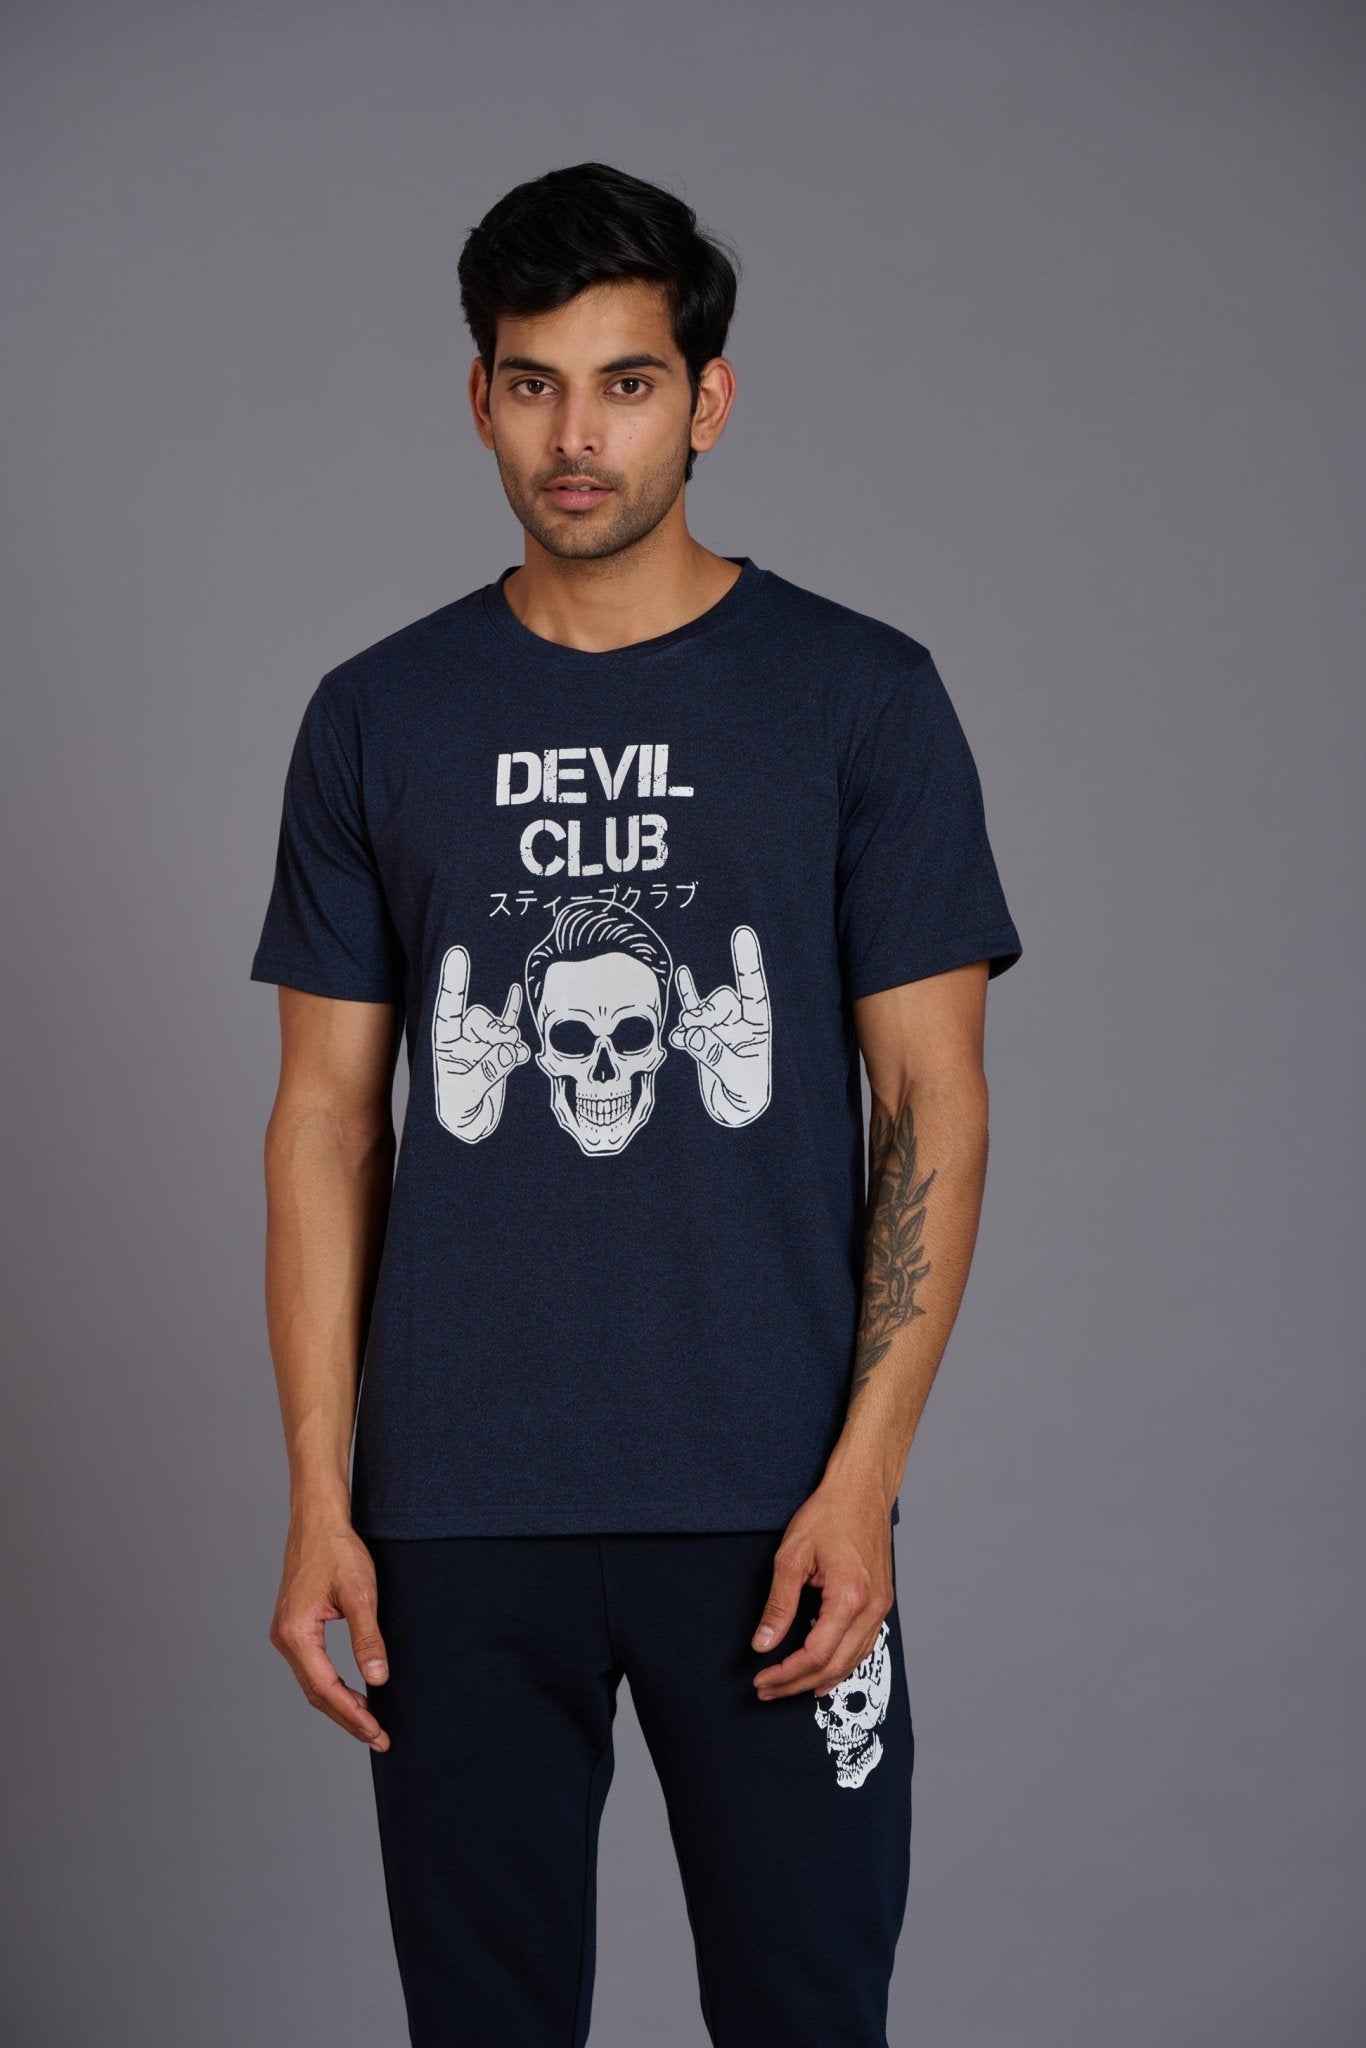 Devil's Club Printed Navy Blue T-Shirt for Men - Go Devil